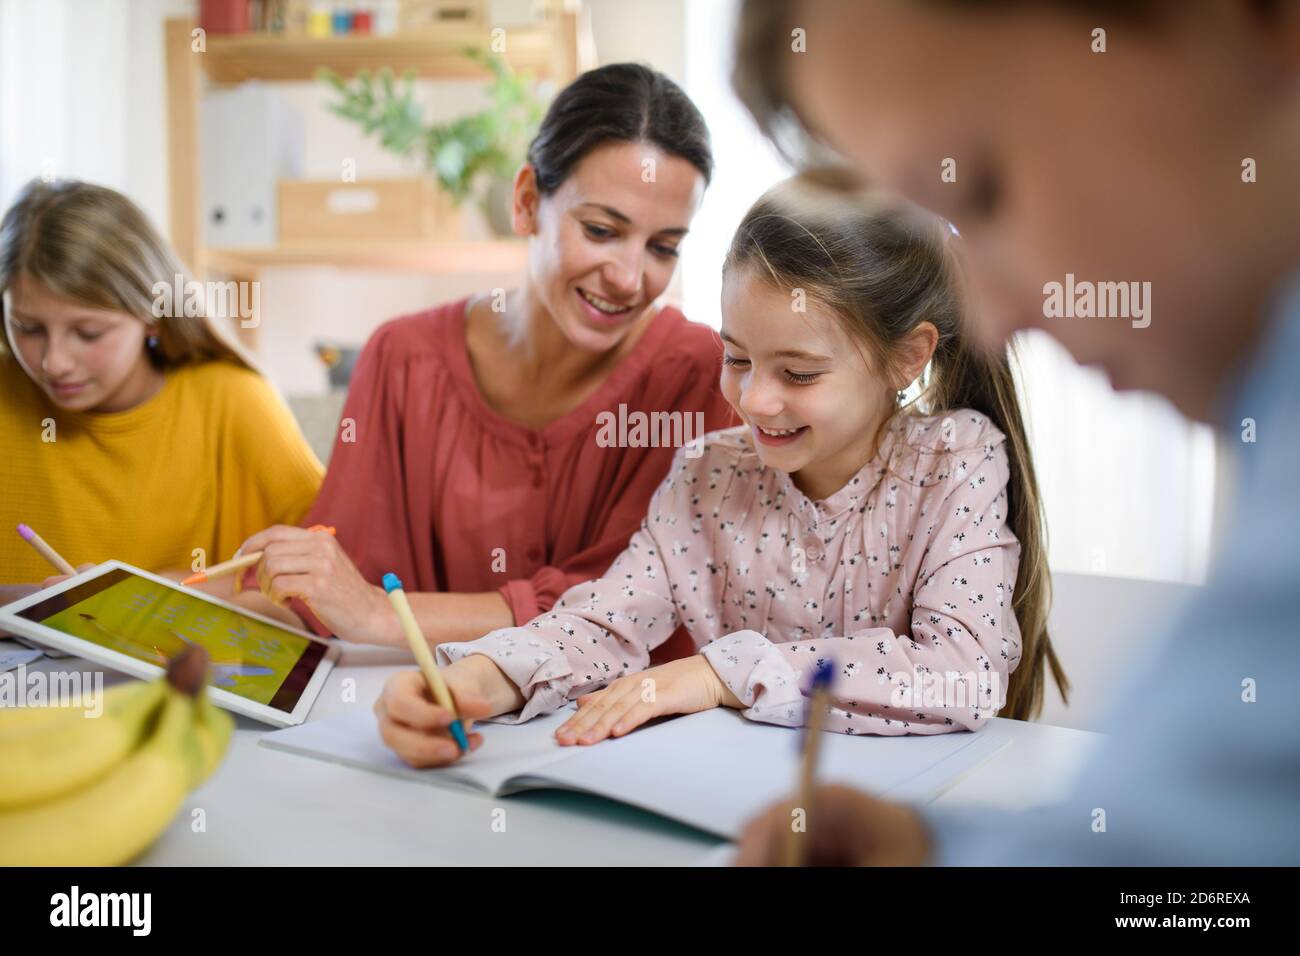 Group of homeschooling children with teacher studying indoors, coronavirus concept. Stock Photo